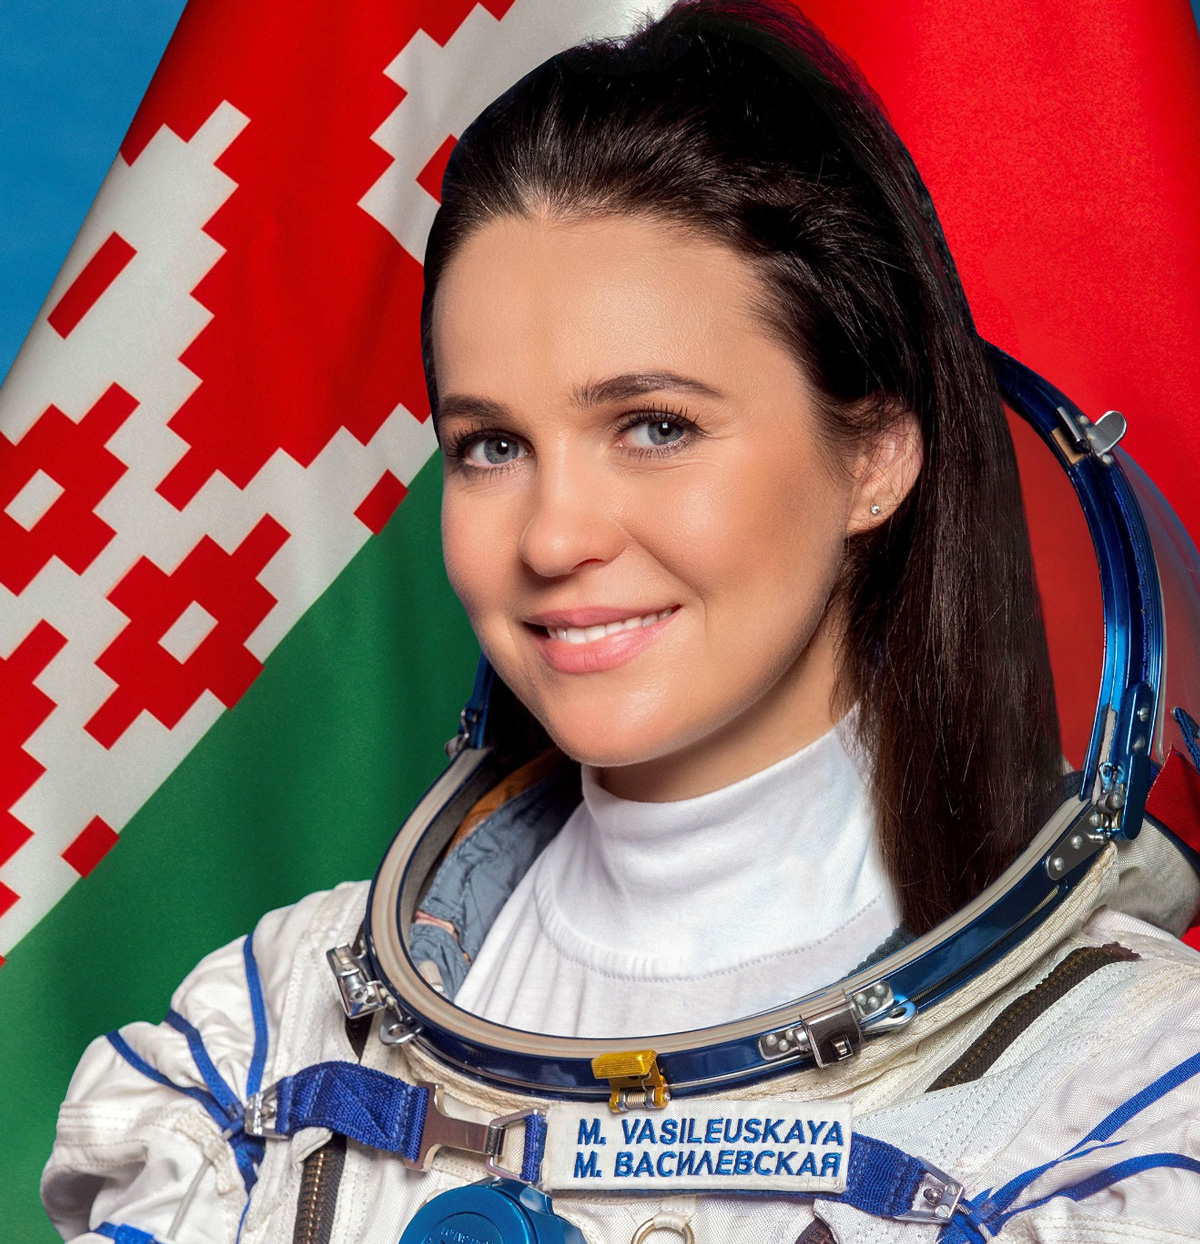 Flight Attendant Marina Vasilevskaya is the first Belarusian woman that has participate in a space flight